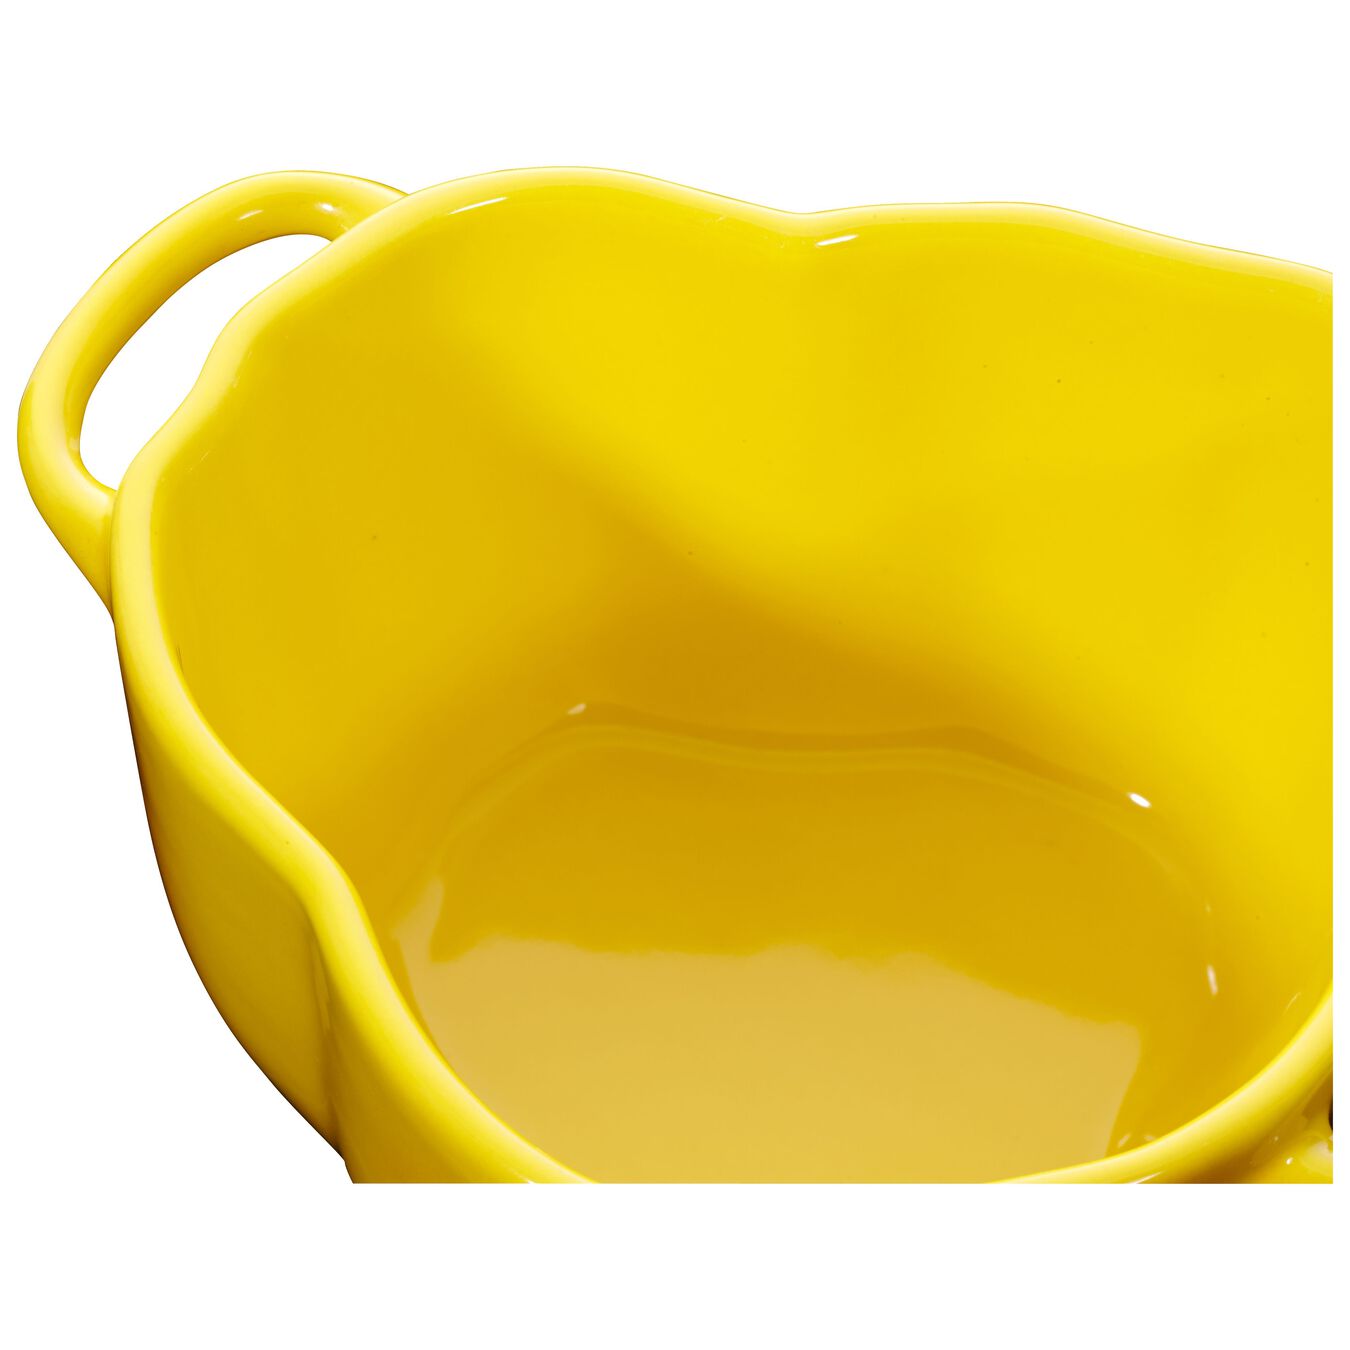 450 ml ceramic Cocotte, yellow,,large 2